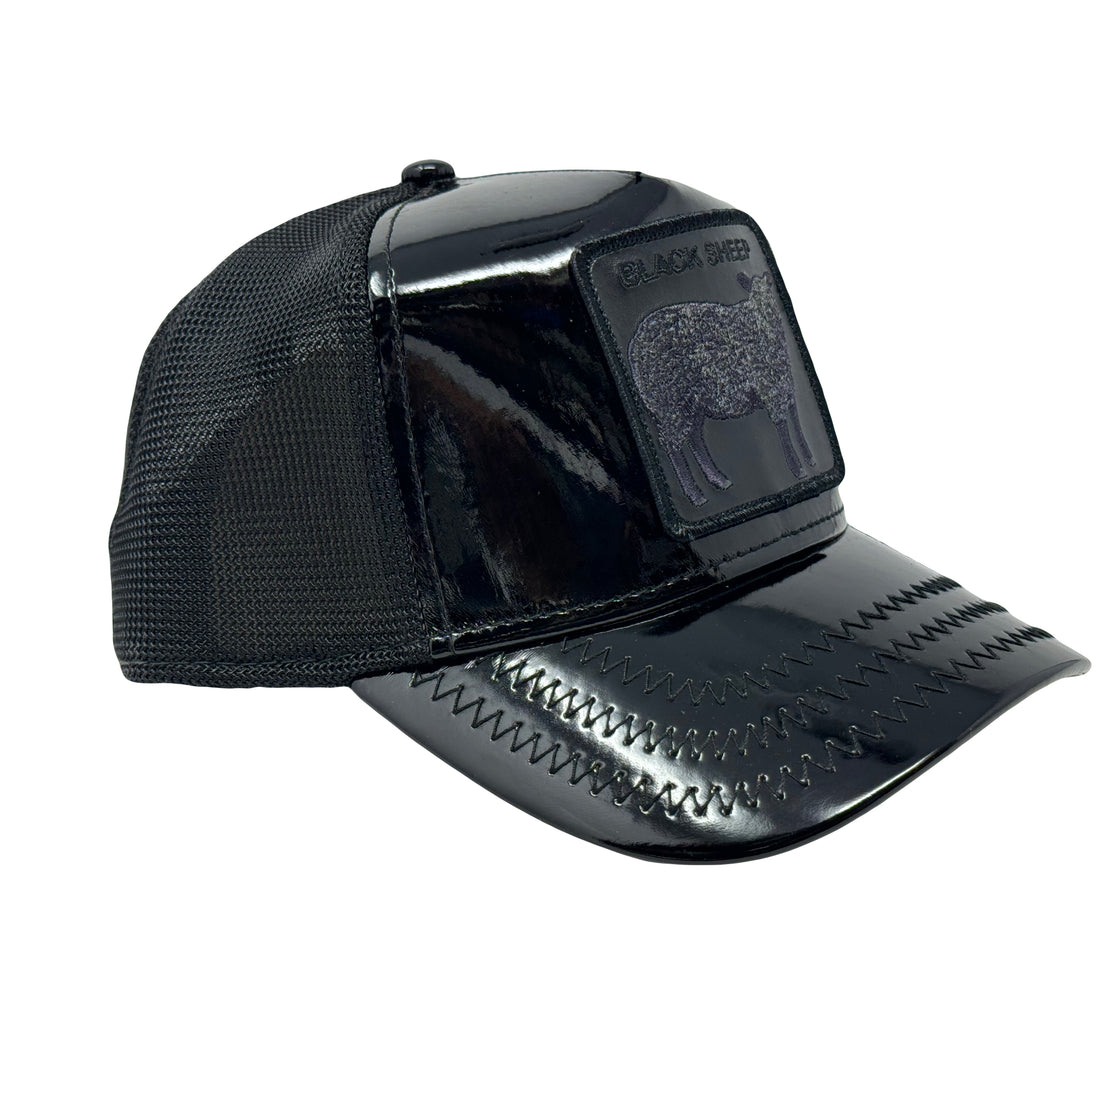 Goorin Bros. Black Sheep Black Patent Leather The Farm Trucker Hat